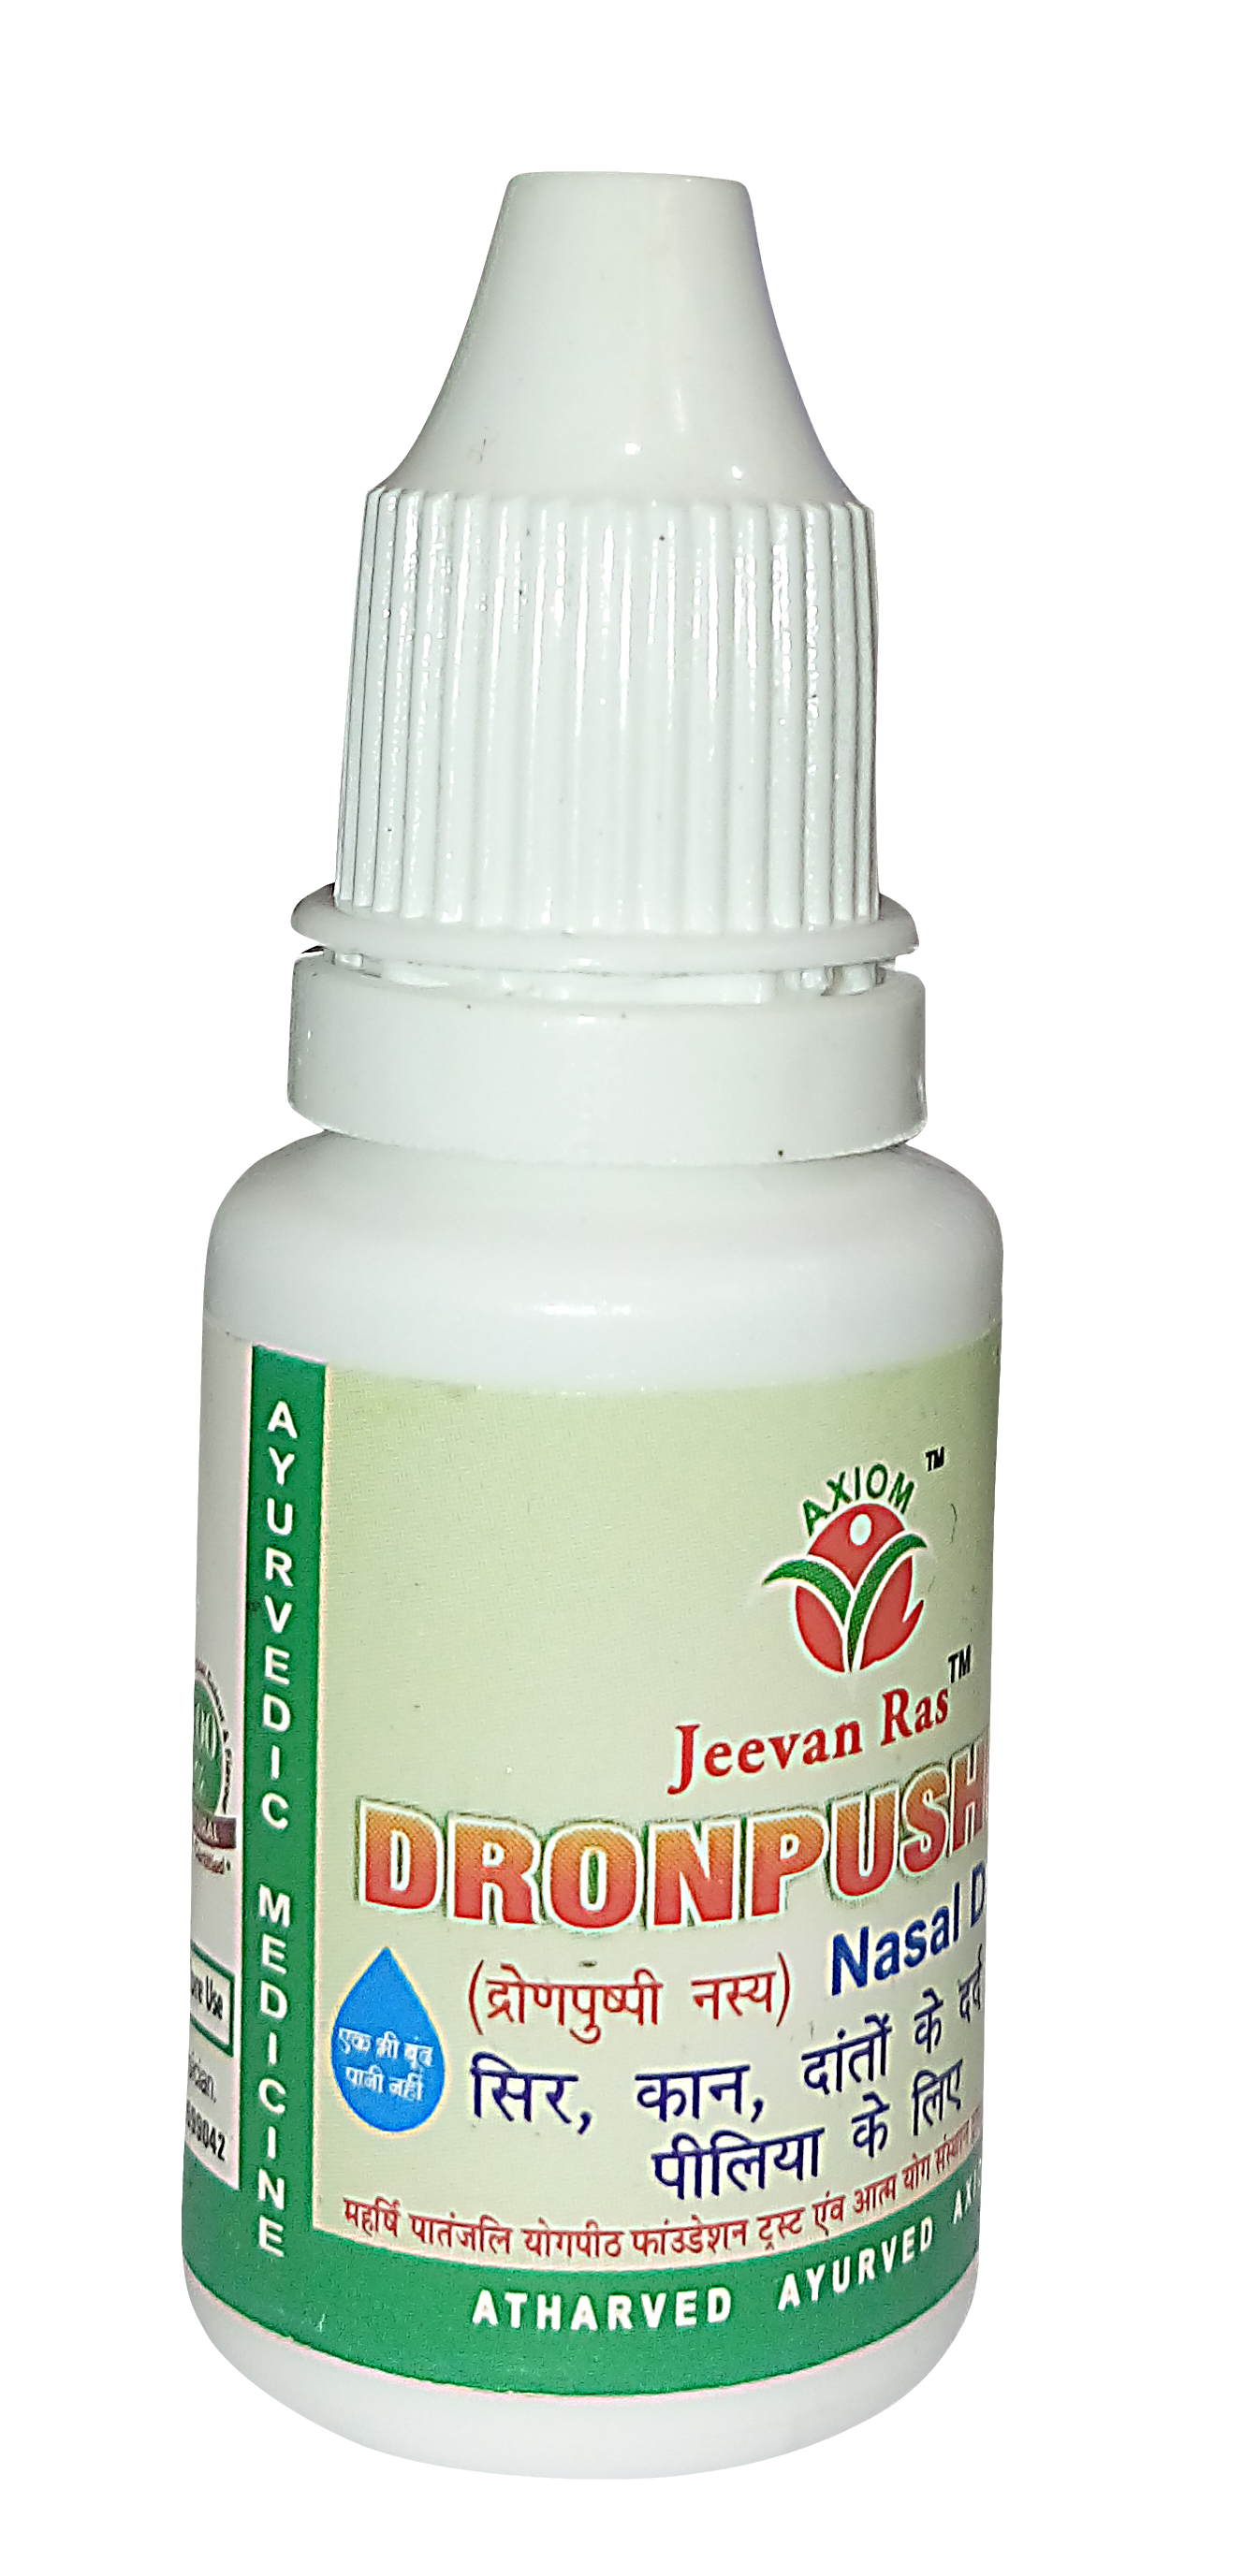 Buy Axiom Dronpushpi Nasal drop at Best Price Online